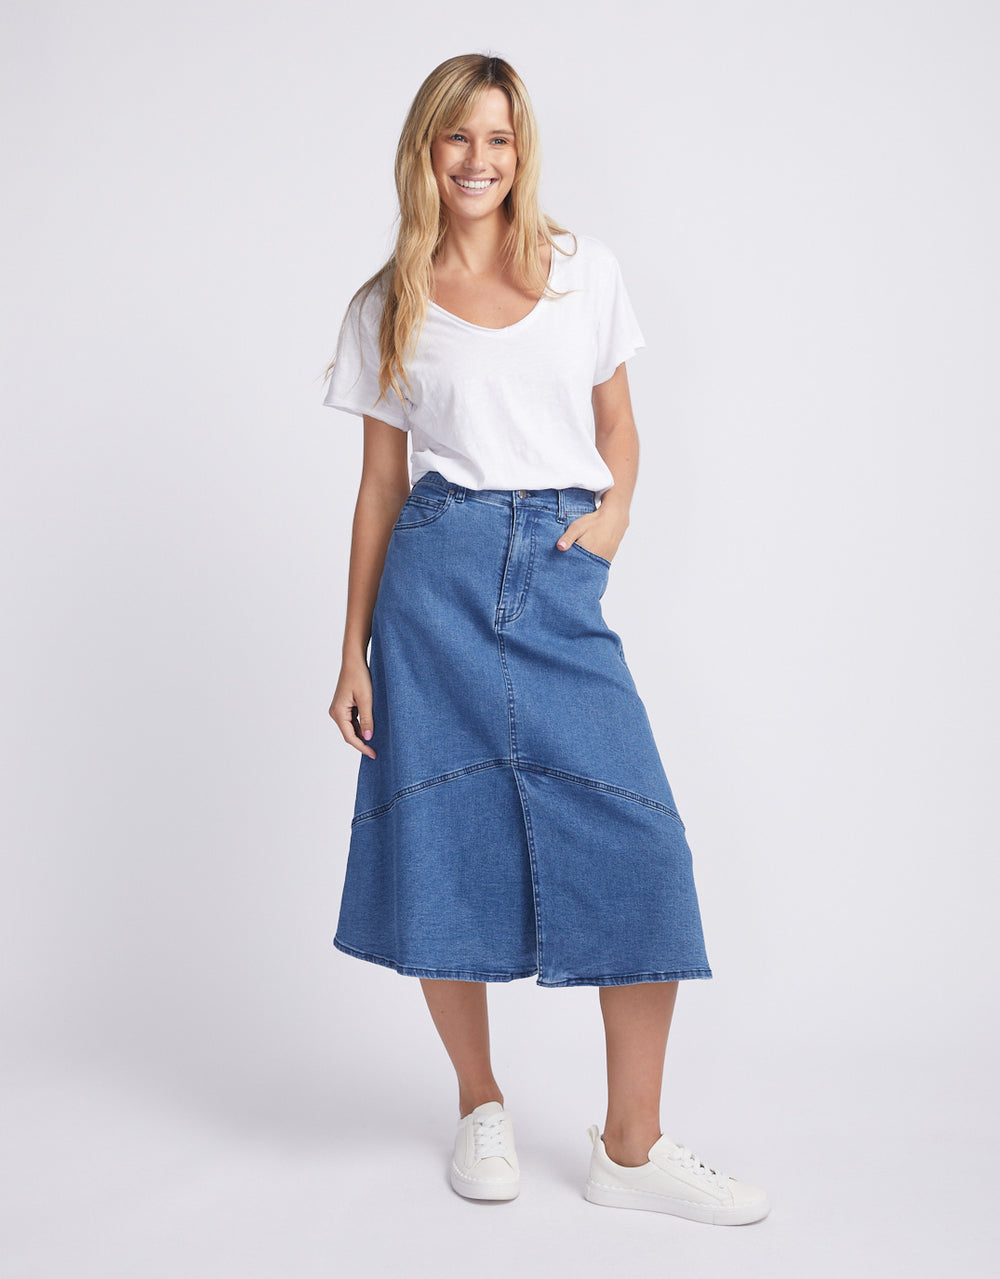 betty-basics-everly-denim-skirt-mid-denim-blue-womens-clothing